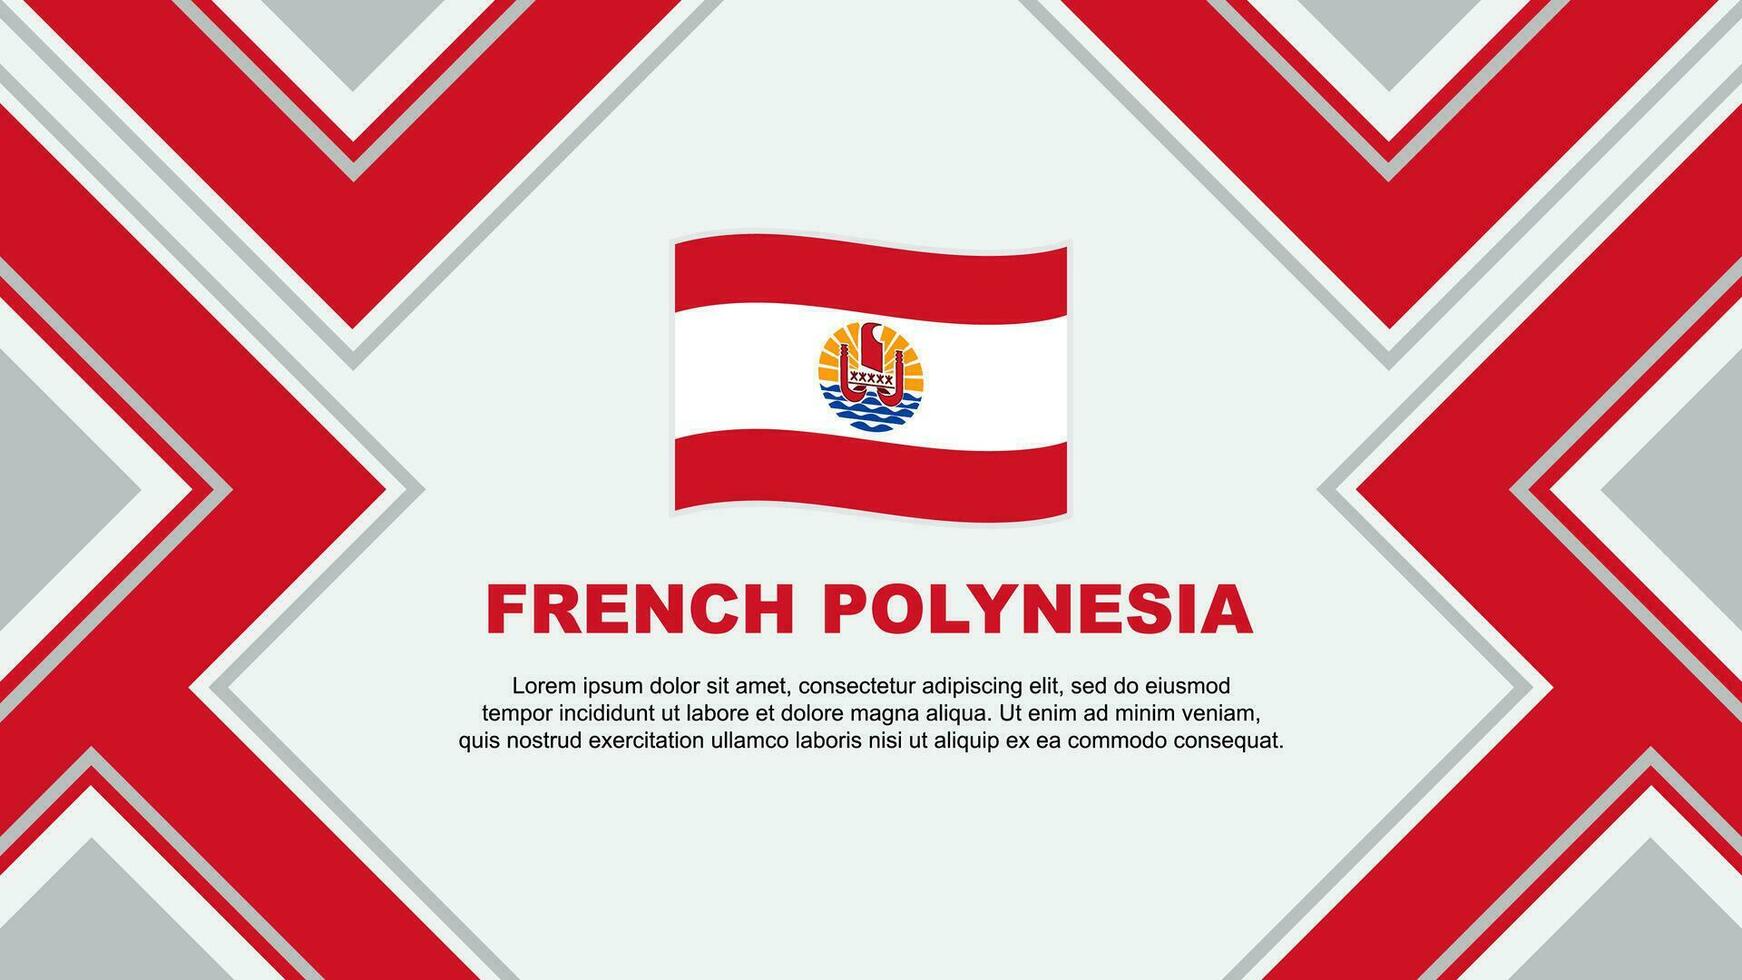 francés Polinesia bandera resumen antecedentes diseño modelo. francés Polinesia independencia día bandera fondo de pantalla vector ilustración. francés Polinesia vector